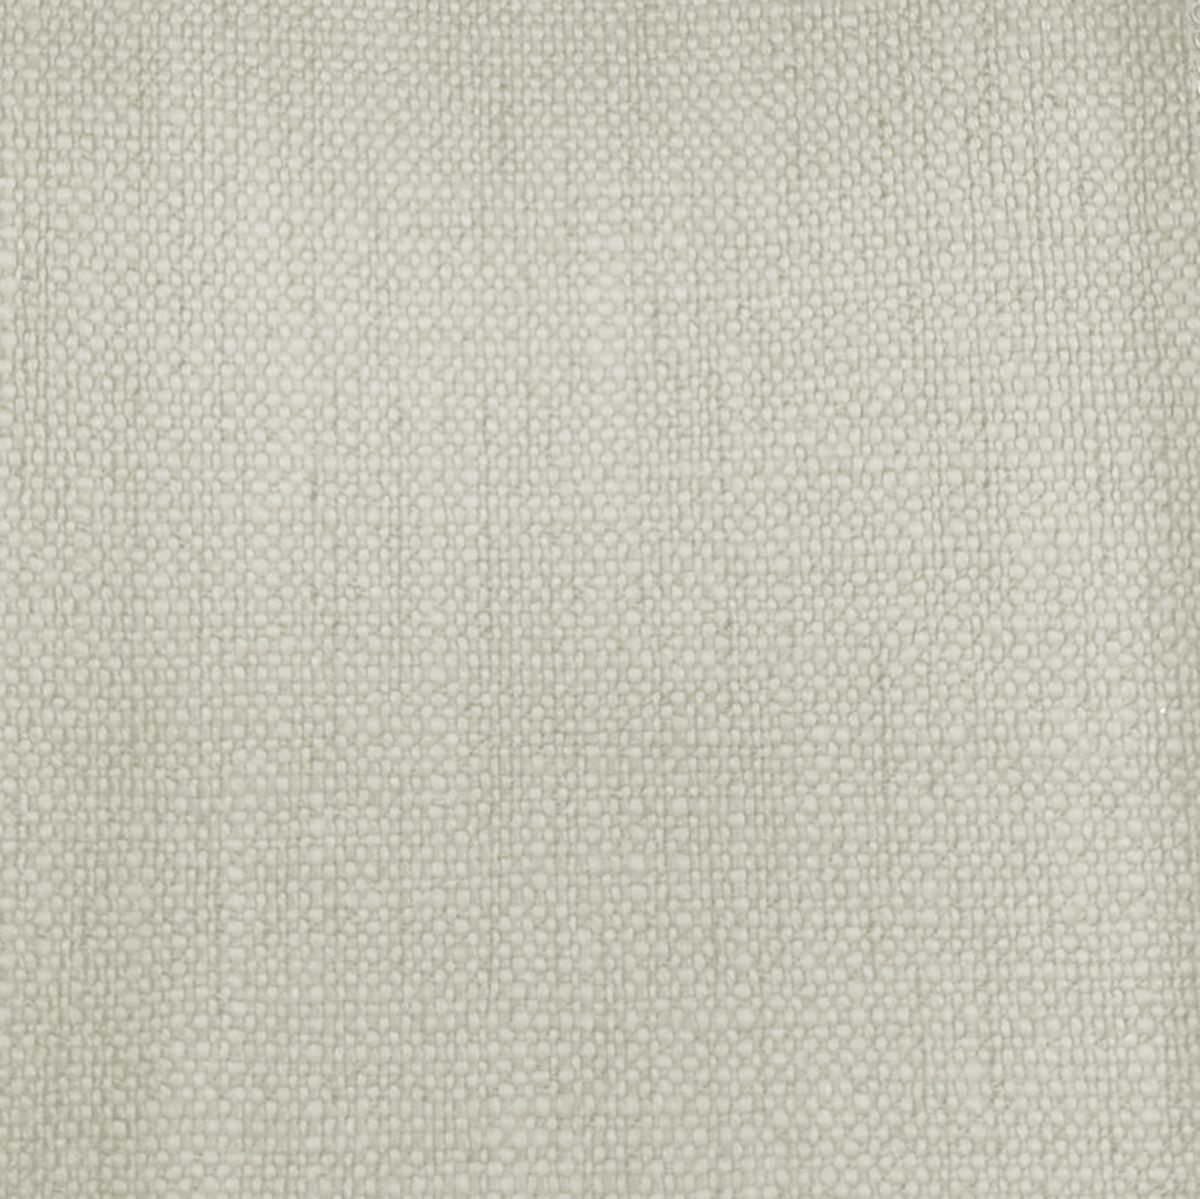 Trento Cream Fabric by Voyage Maison